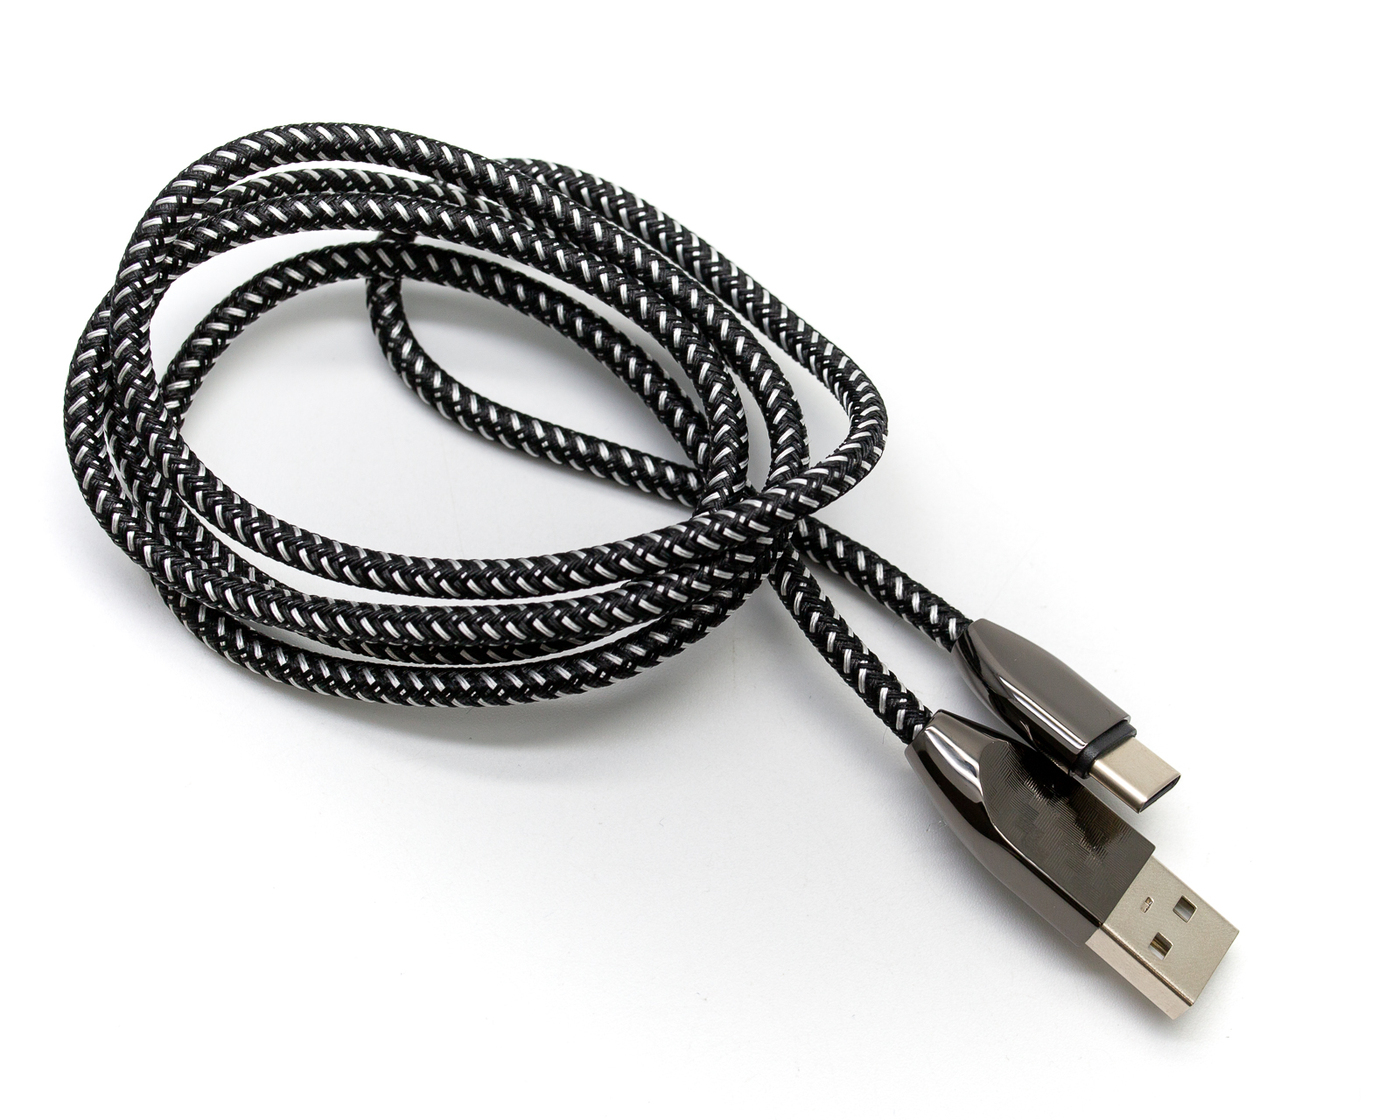 Isa USB 2.0 - Type-c 01, 2,1a, 1 метр, металл/нейлон, серебро. Усиливающий провод. Кабель USB - Type-c FONENG x82 1m, 3a , нейлон (Black) цена кабеля 145 руб.